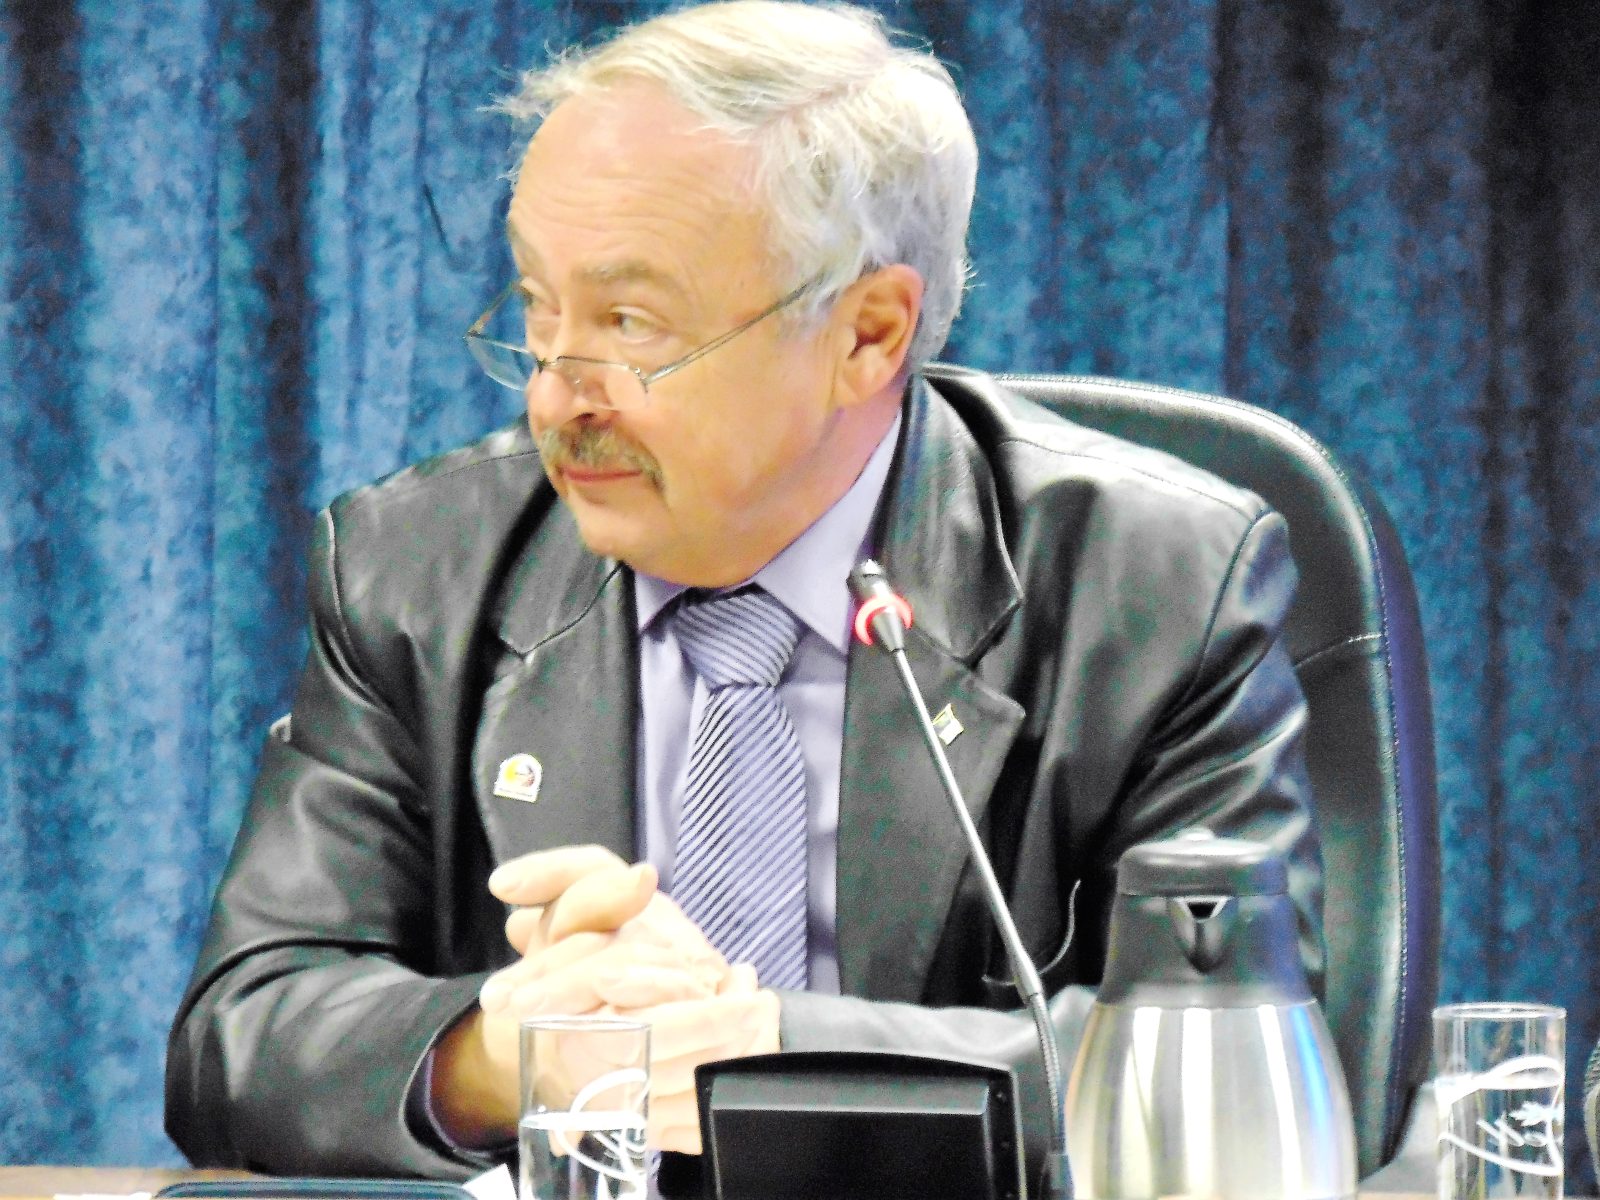 Mayors talk about municipal 2020 resolutions